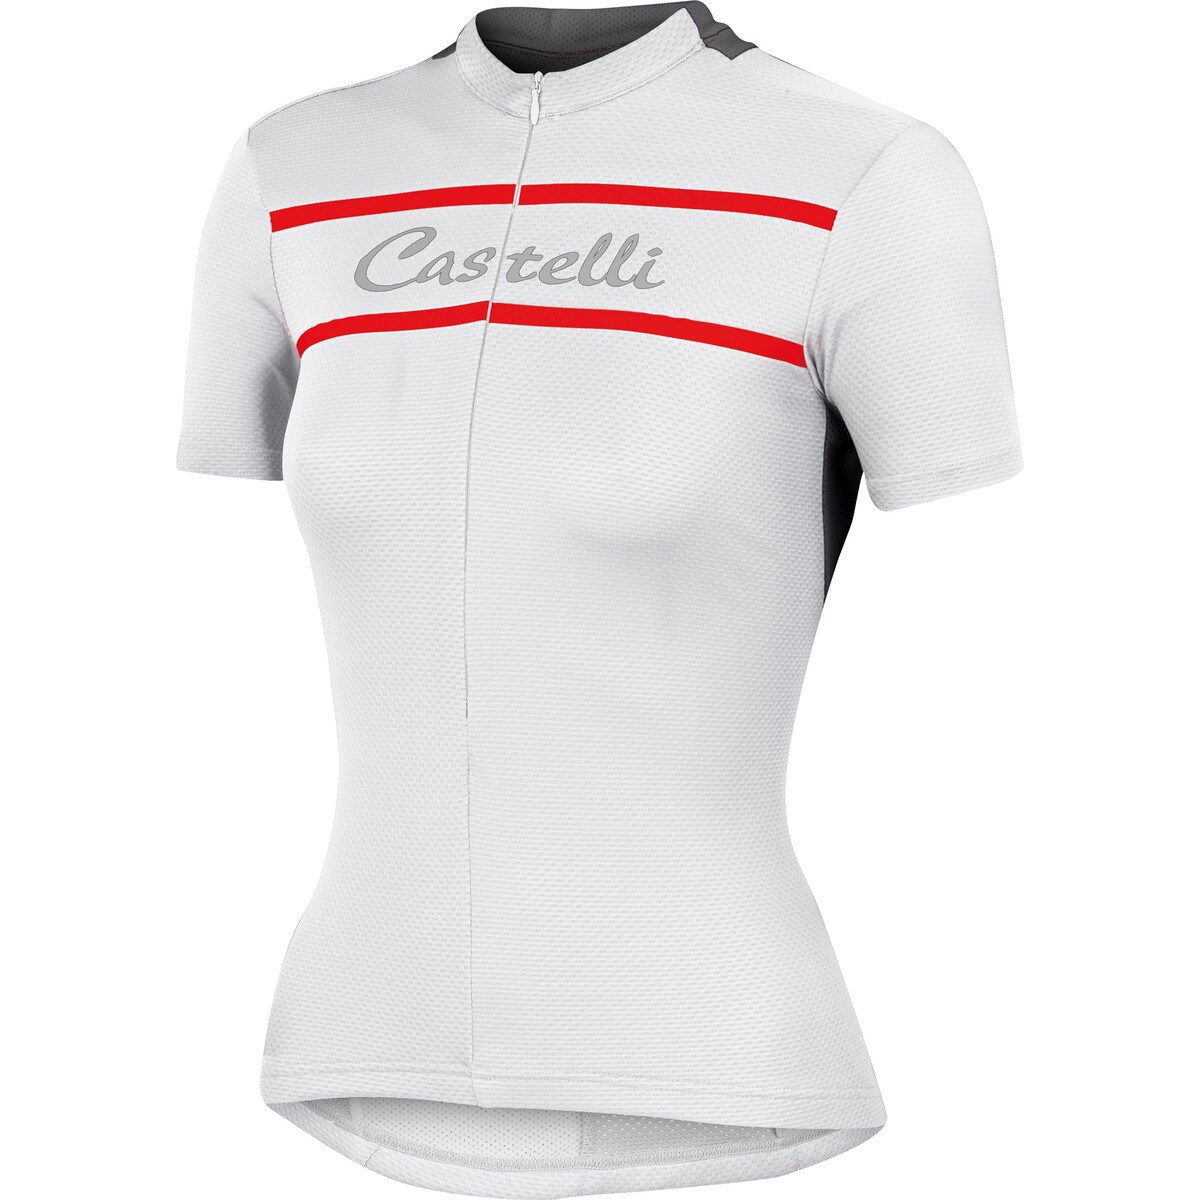 Castelli Promessa Jersey Short Sleeve Women's